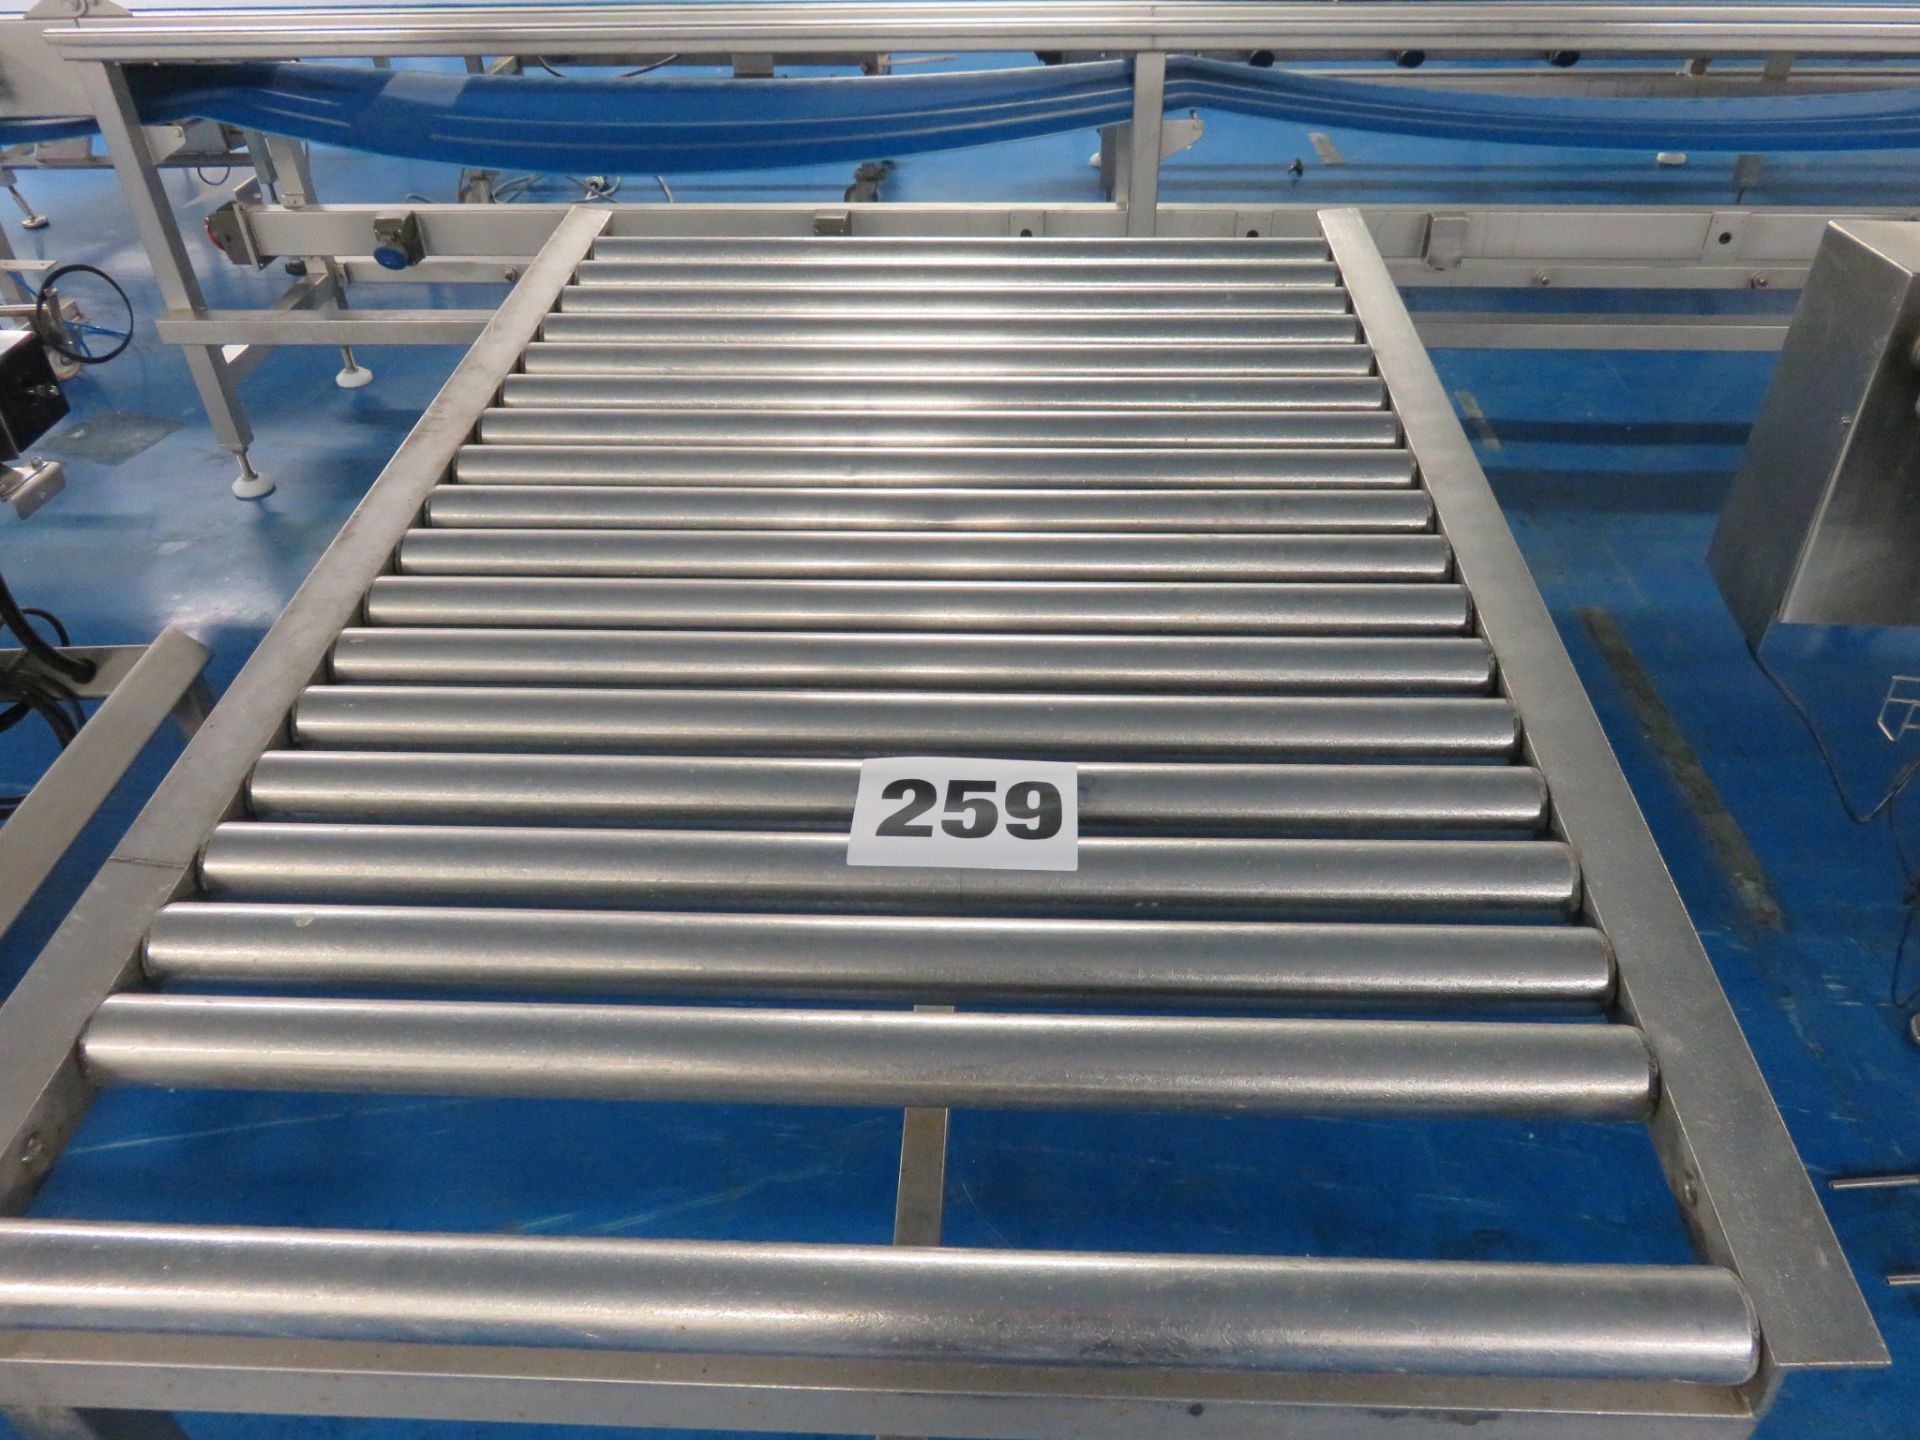 S/s Roller Conveyor approx. 950mm wide x 1400mm long. LO £20 - Image 2 of 2